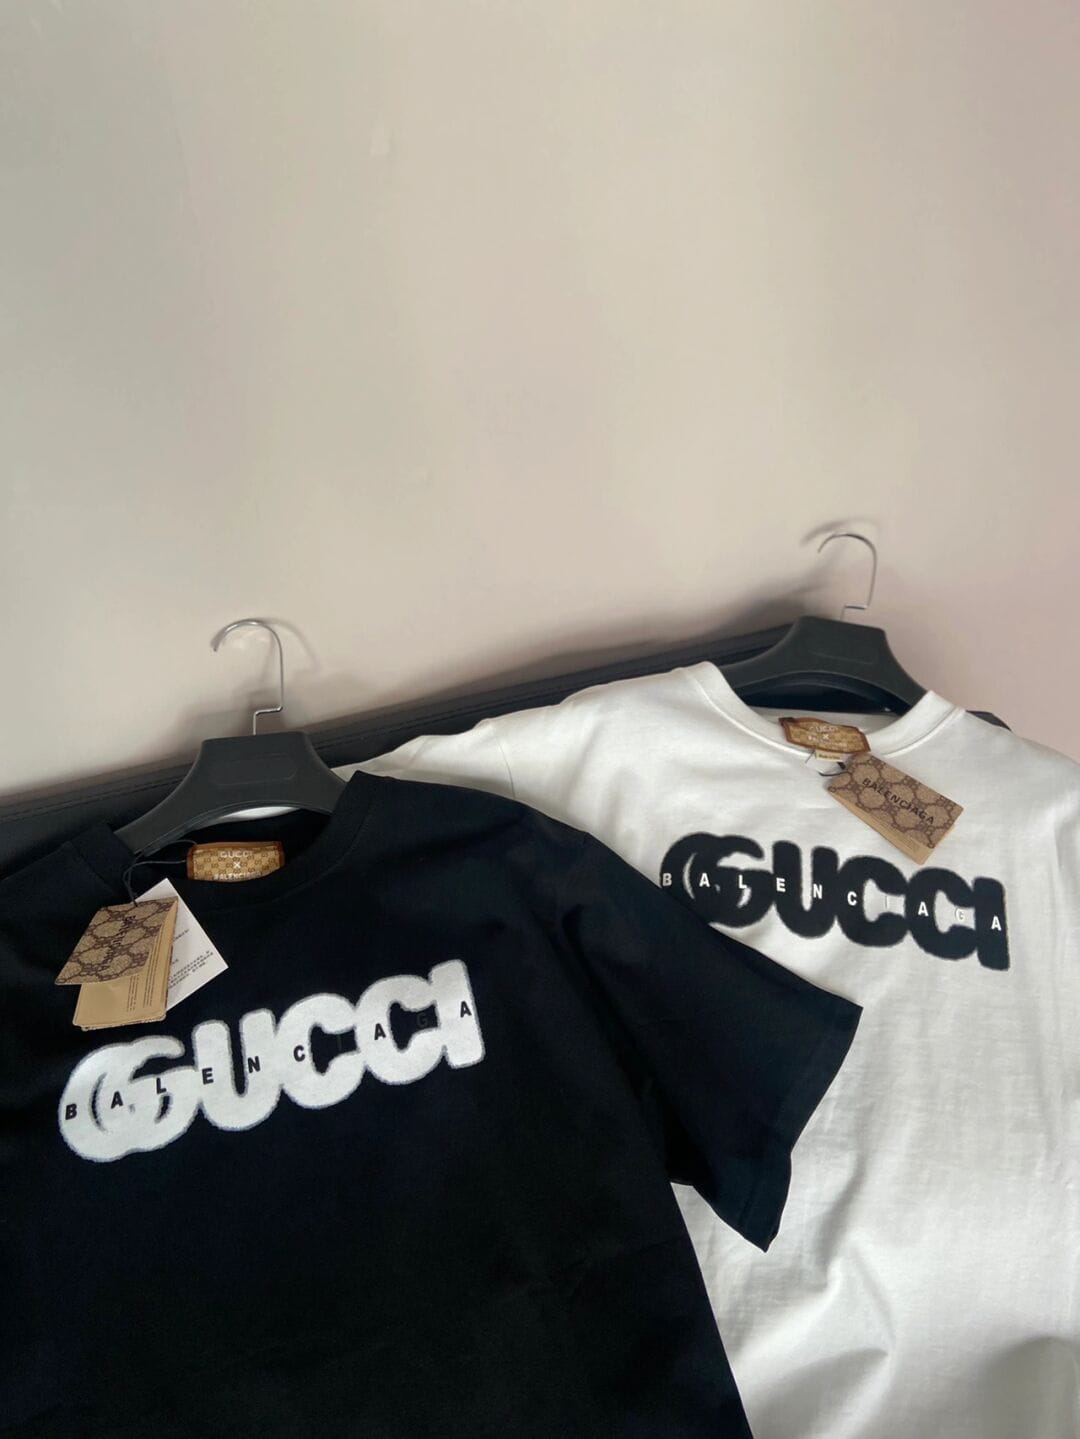 Gucci x Balenciaga T-Shirt